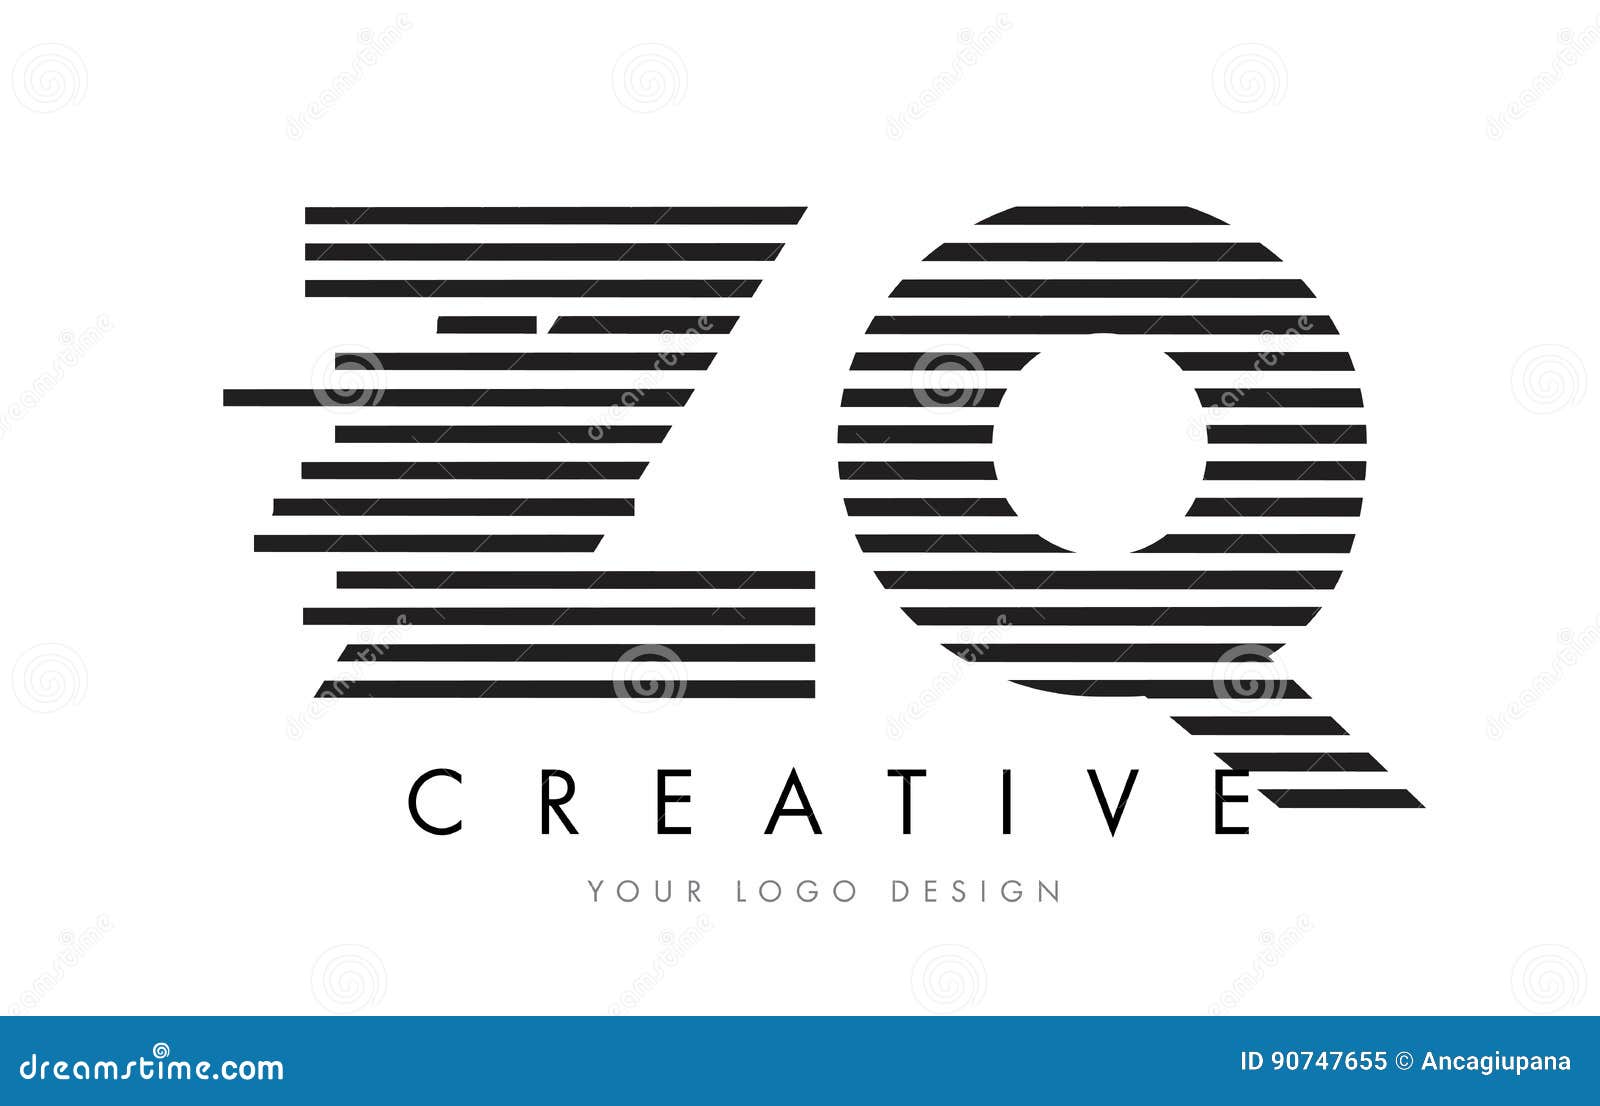 Zq Z Q Zebra Letter Logo Design With Black And White Stripes Stock